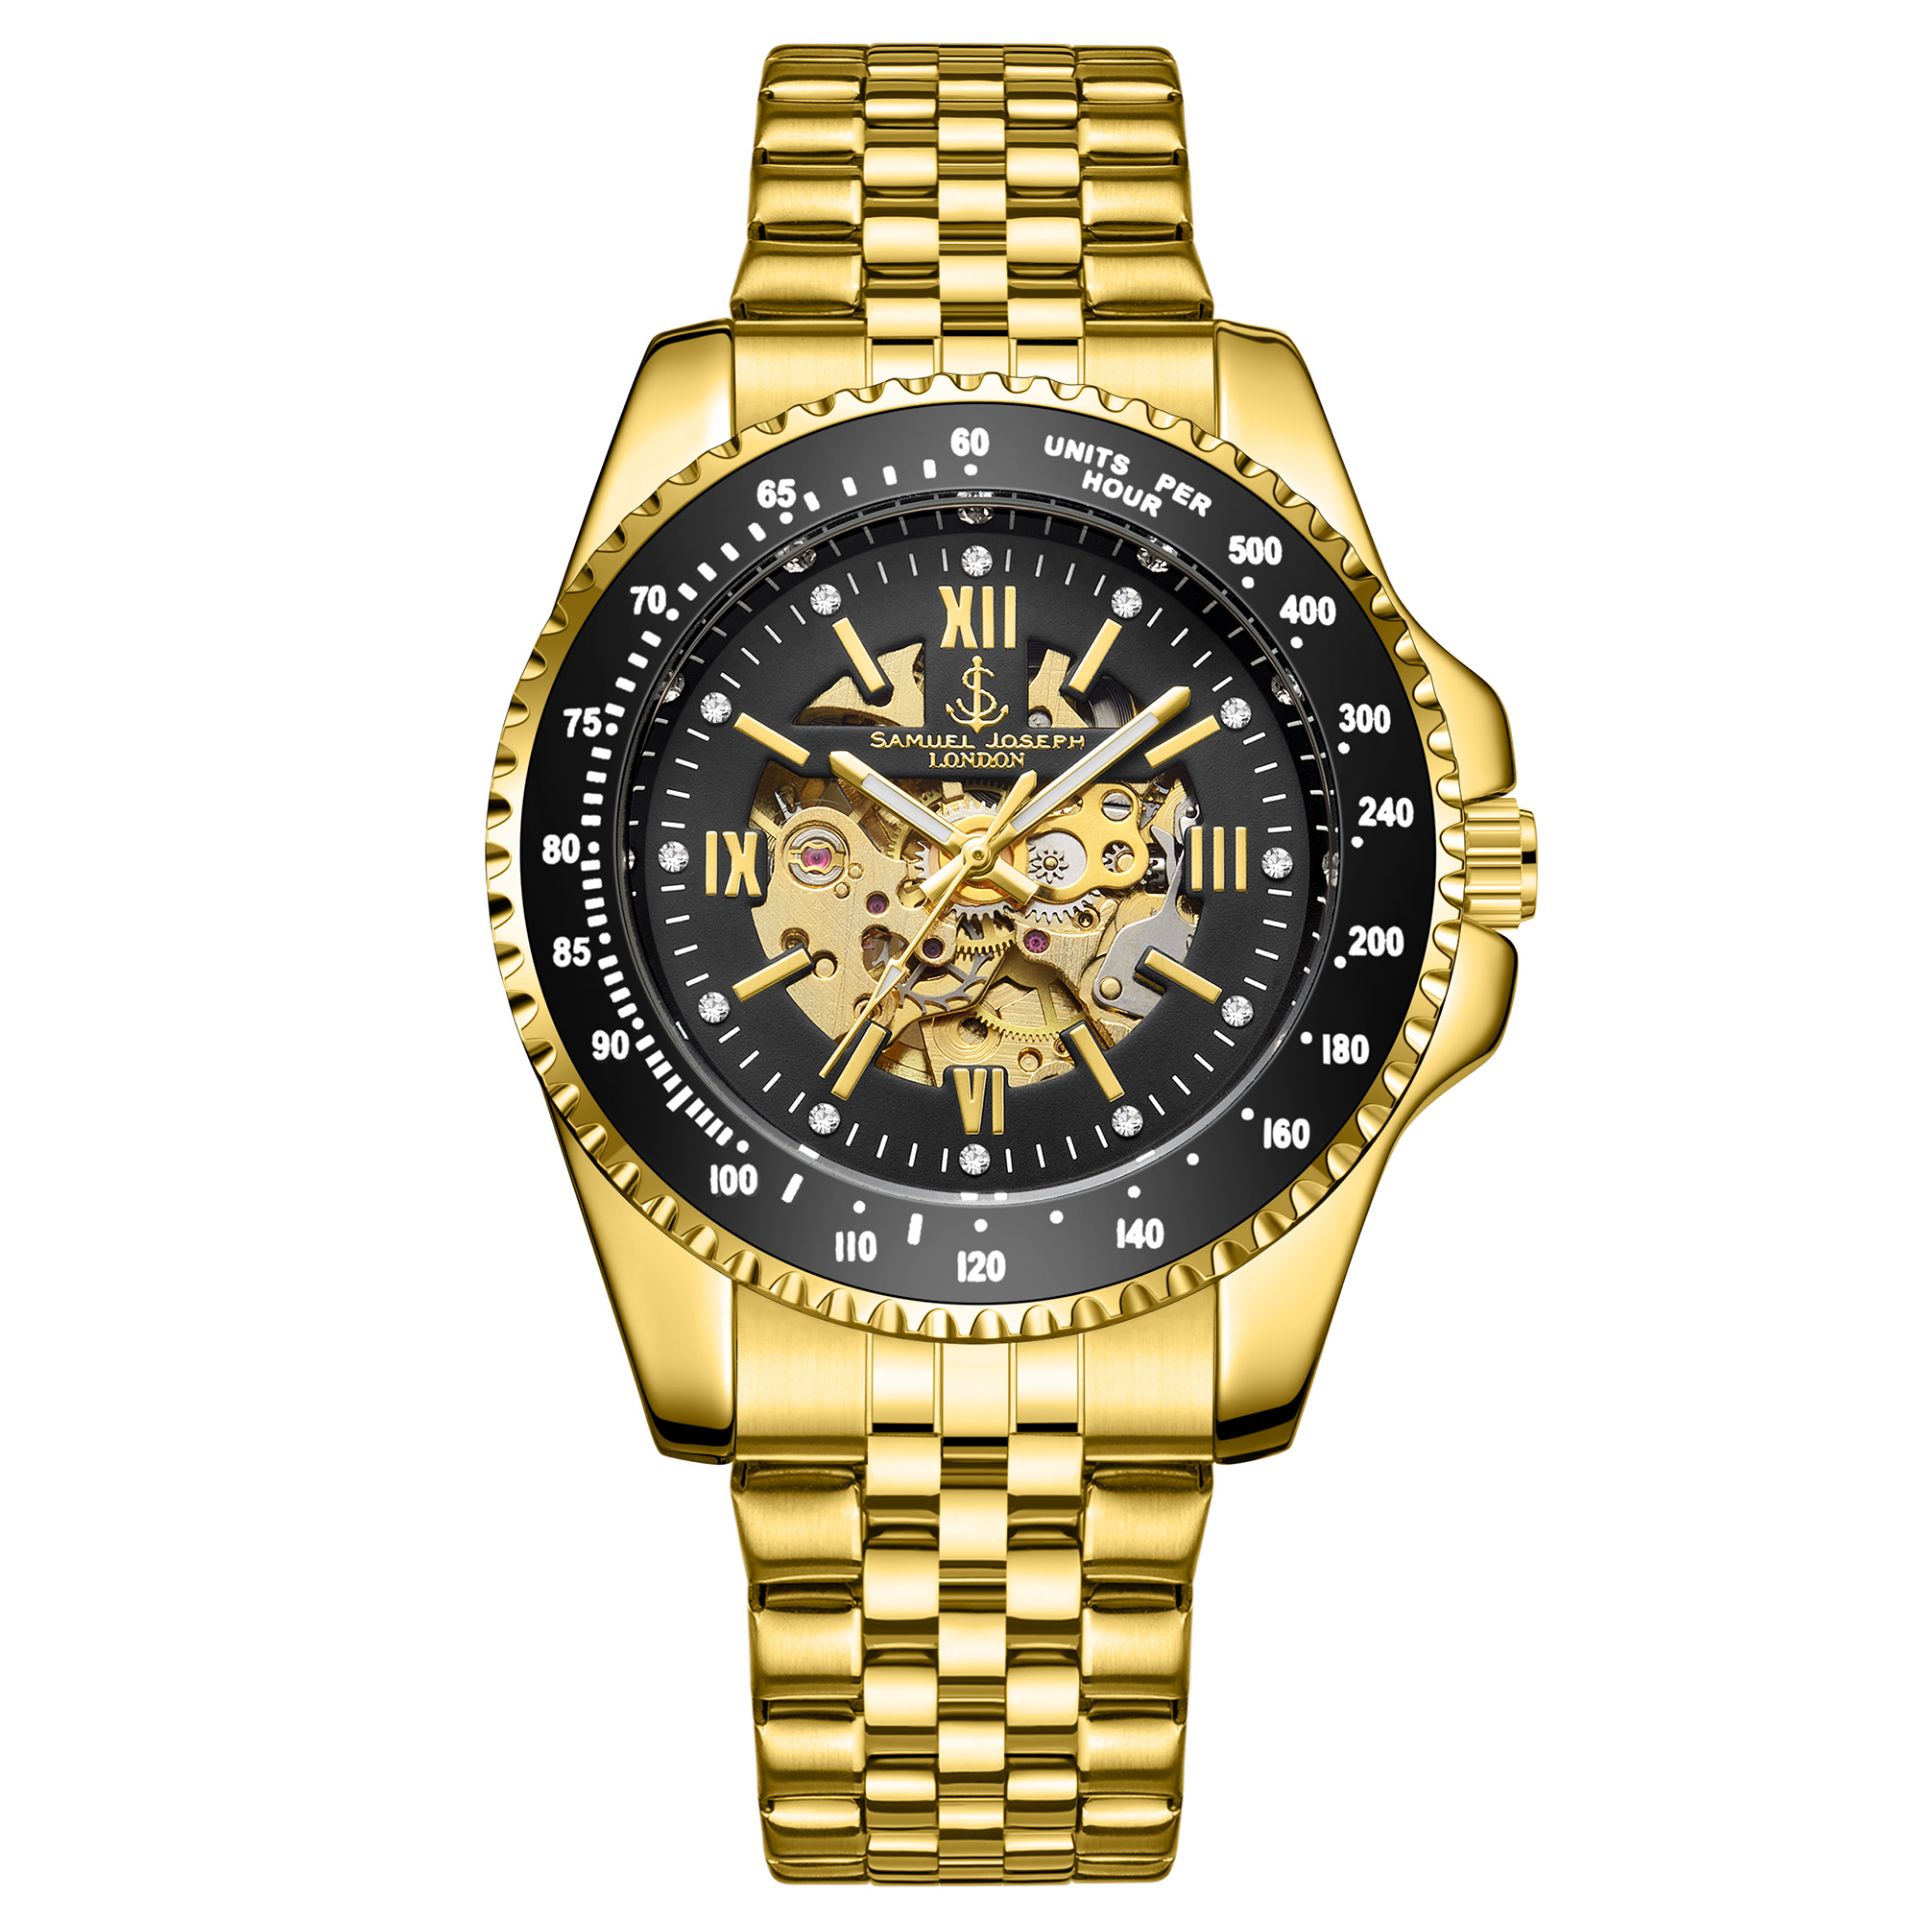 Samuel Joseph Limited Edition Skeleton Mechanism Gold Watch - Free Delivery & 2 Year Warranty